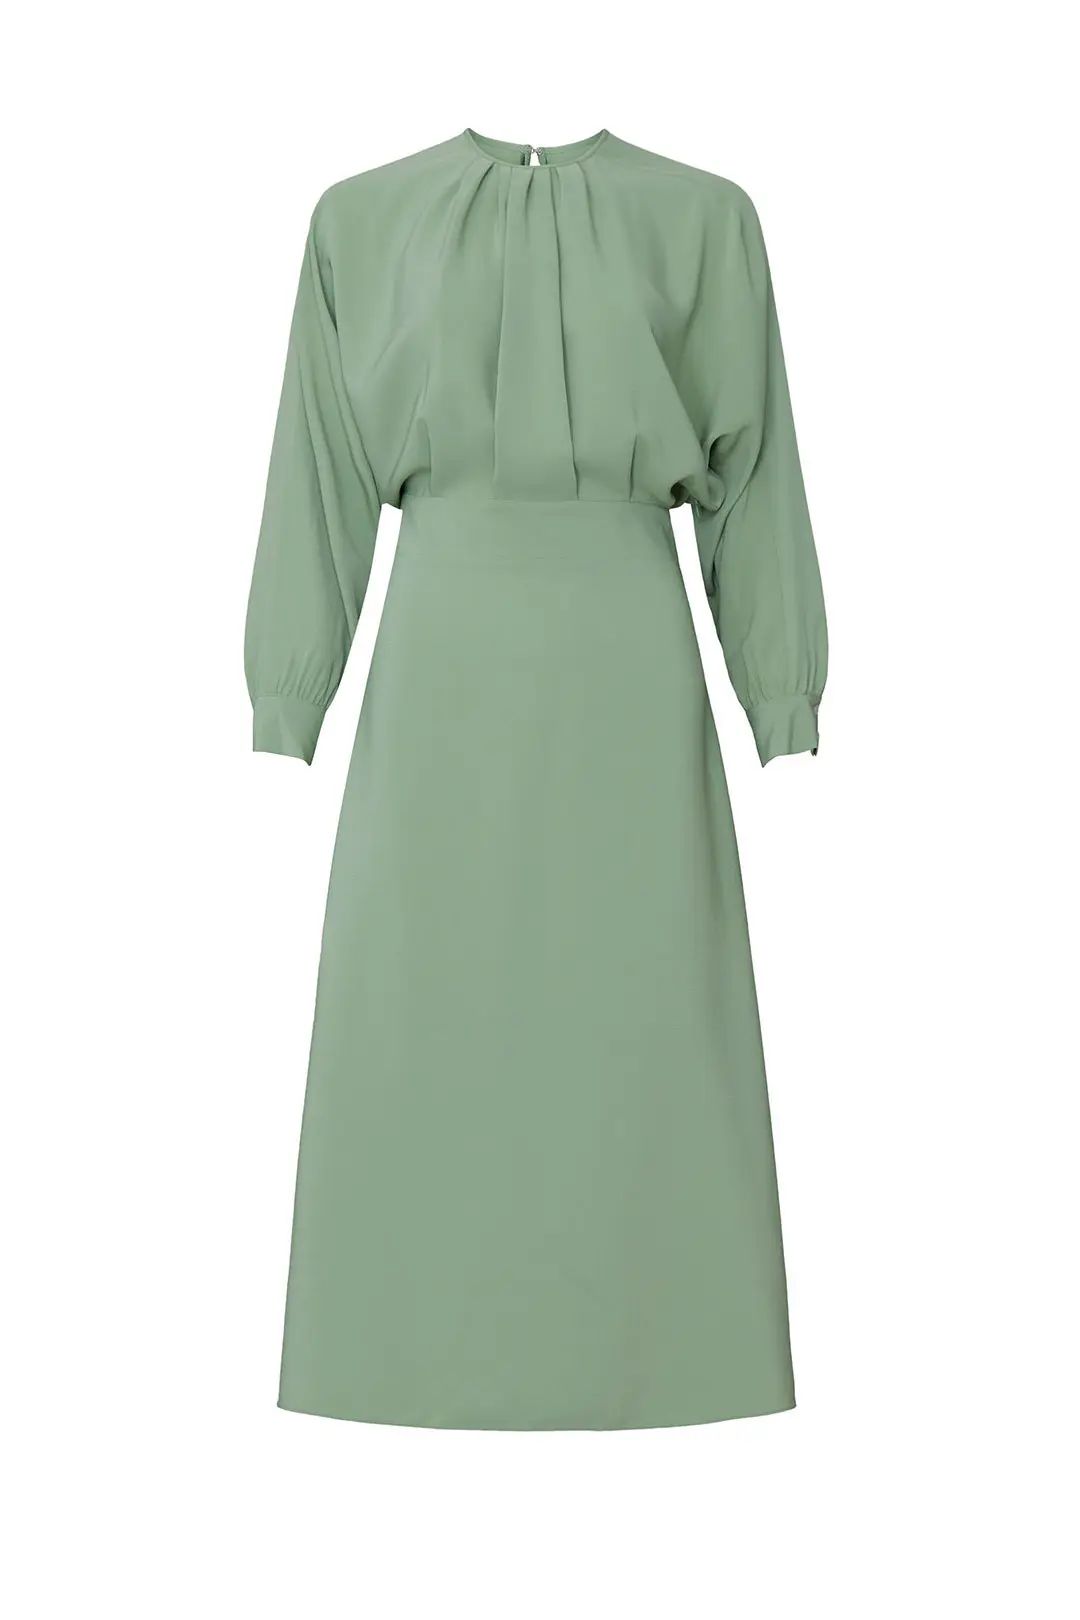 Victoria Victoria Beckham Dolman Sleeve Dress | Rent The Runway